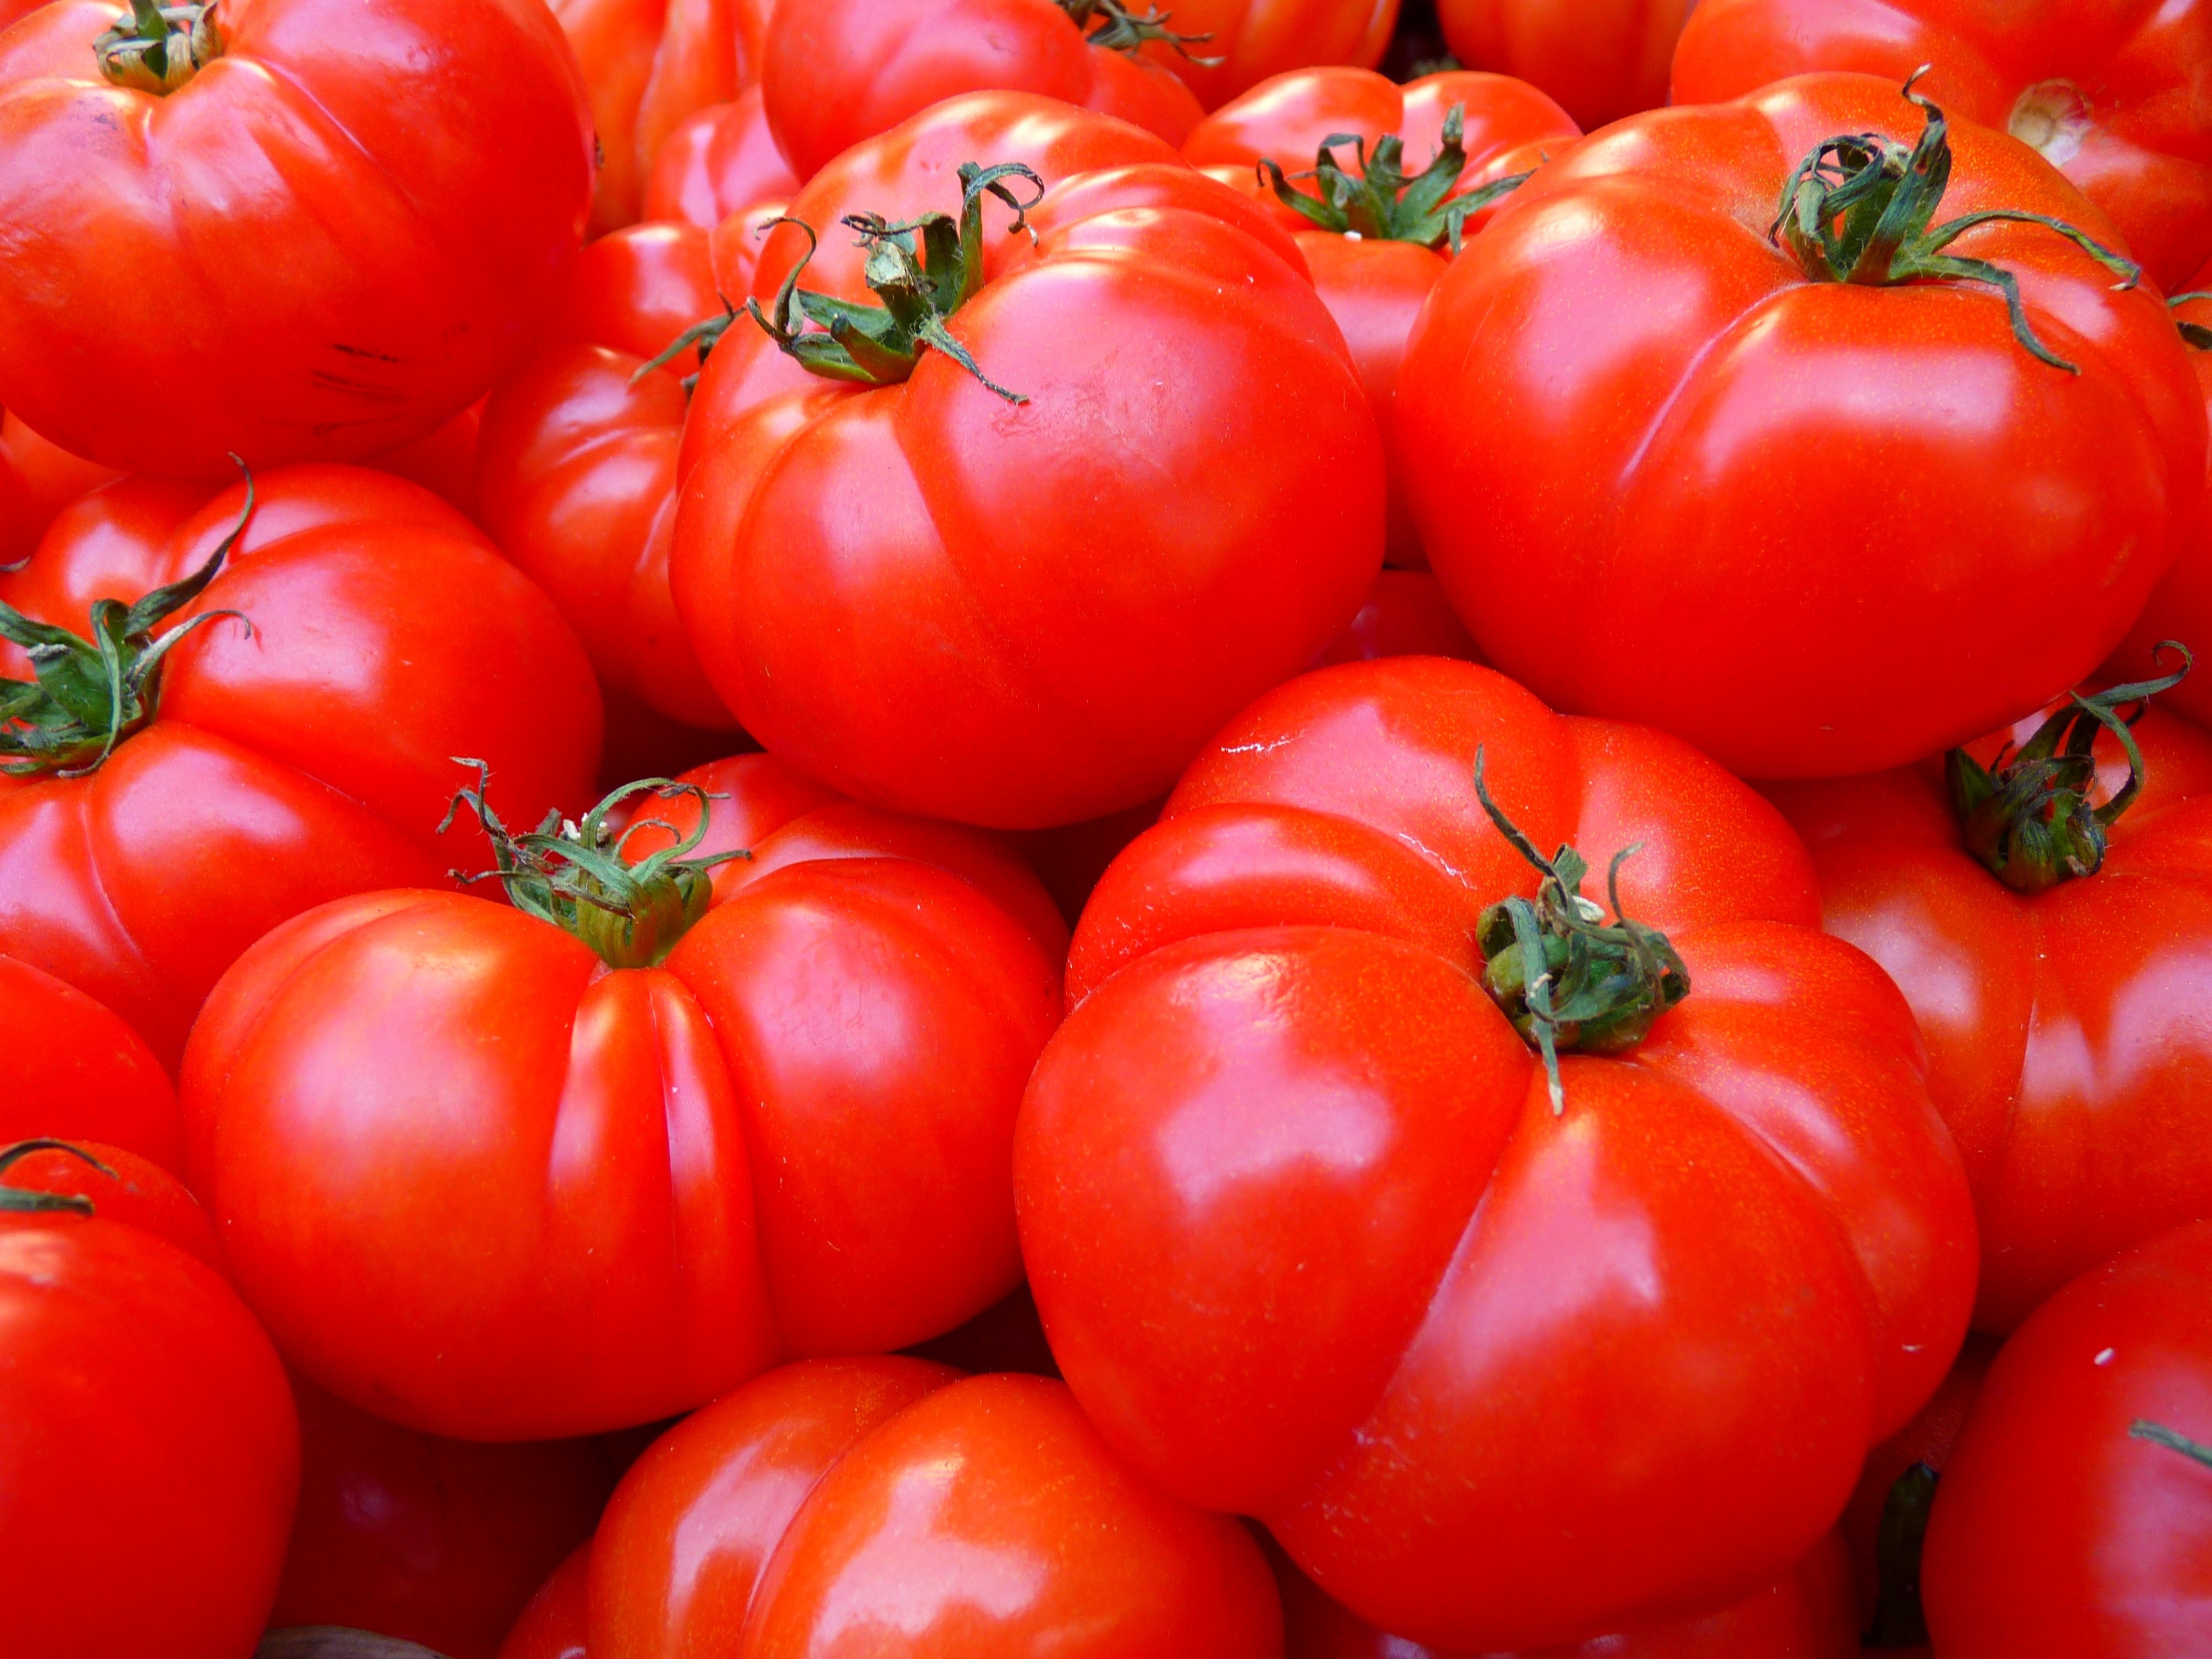 Tomatoes, Vegetables, Red, Food, red, vegetable